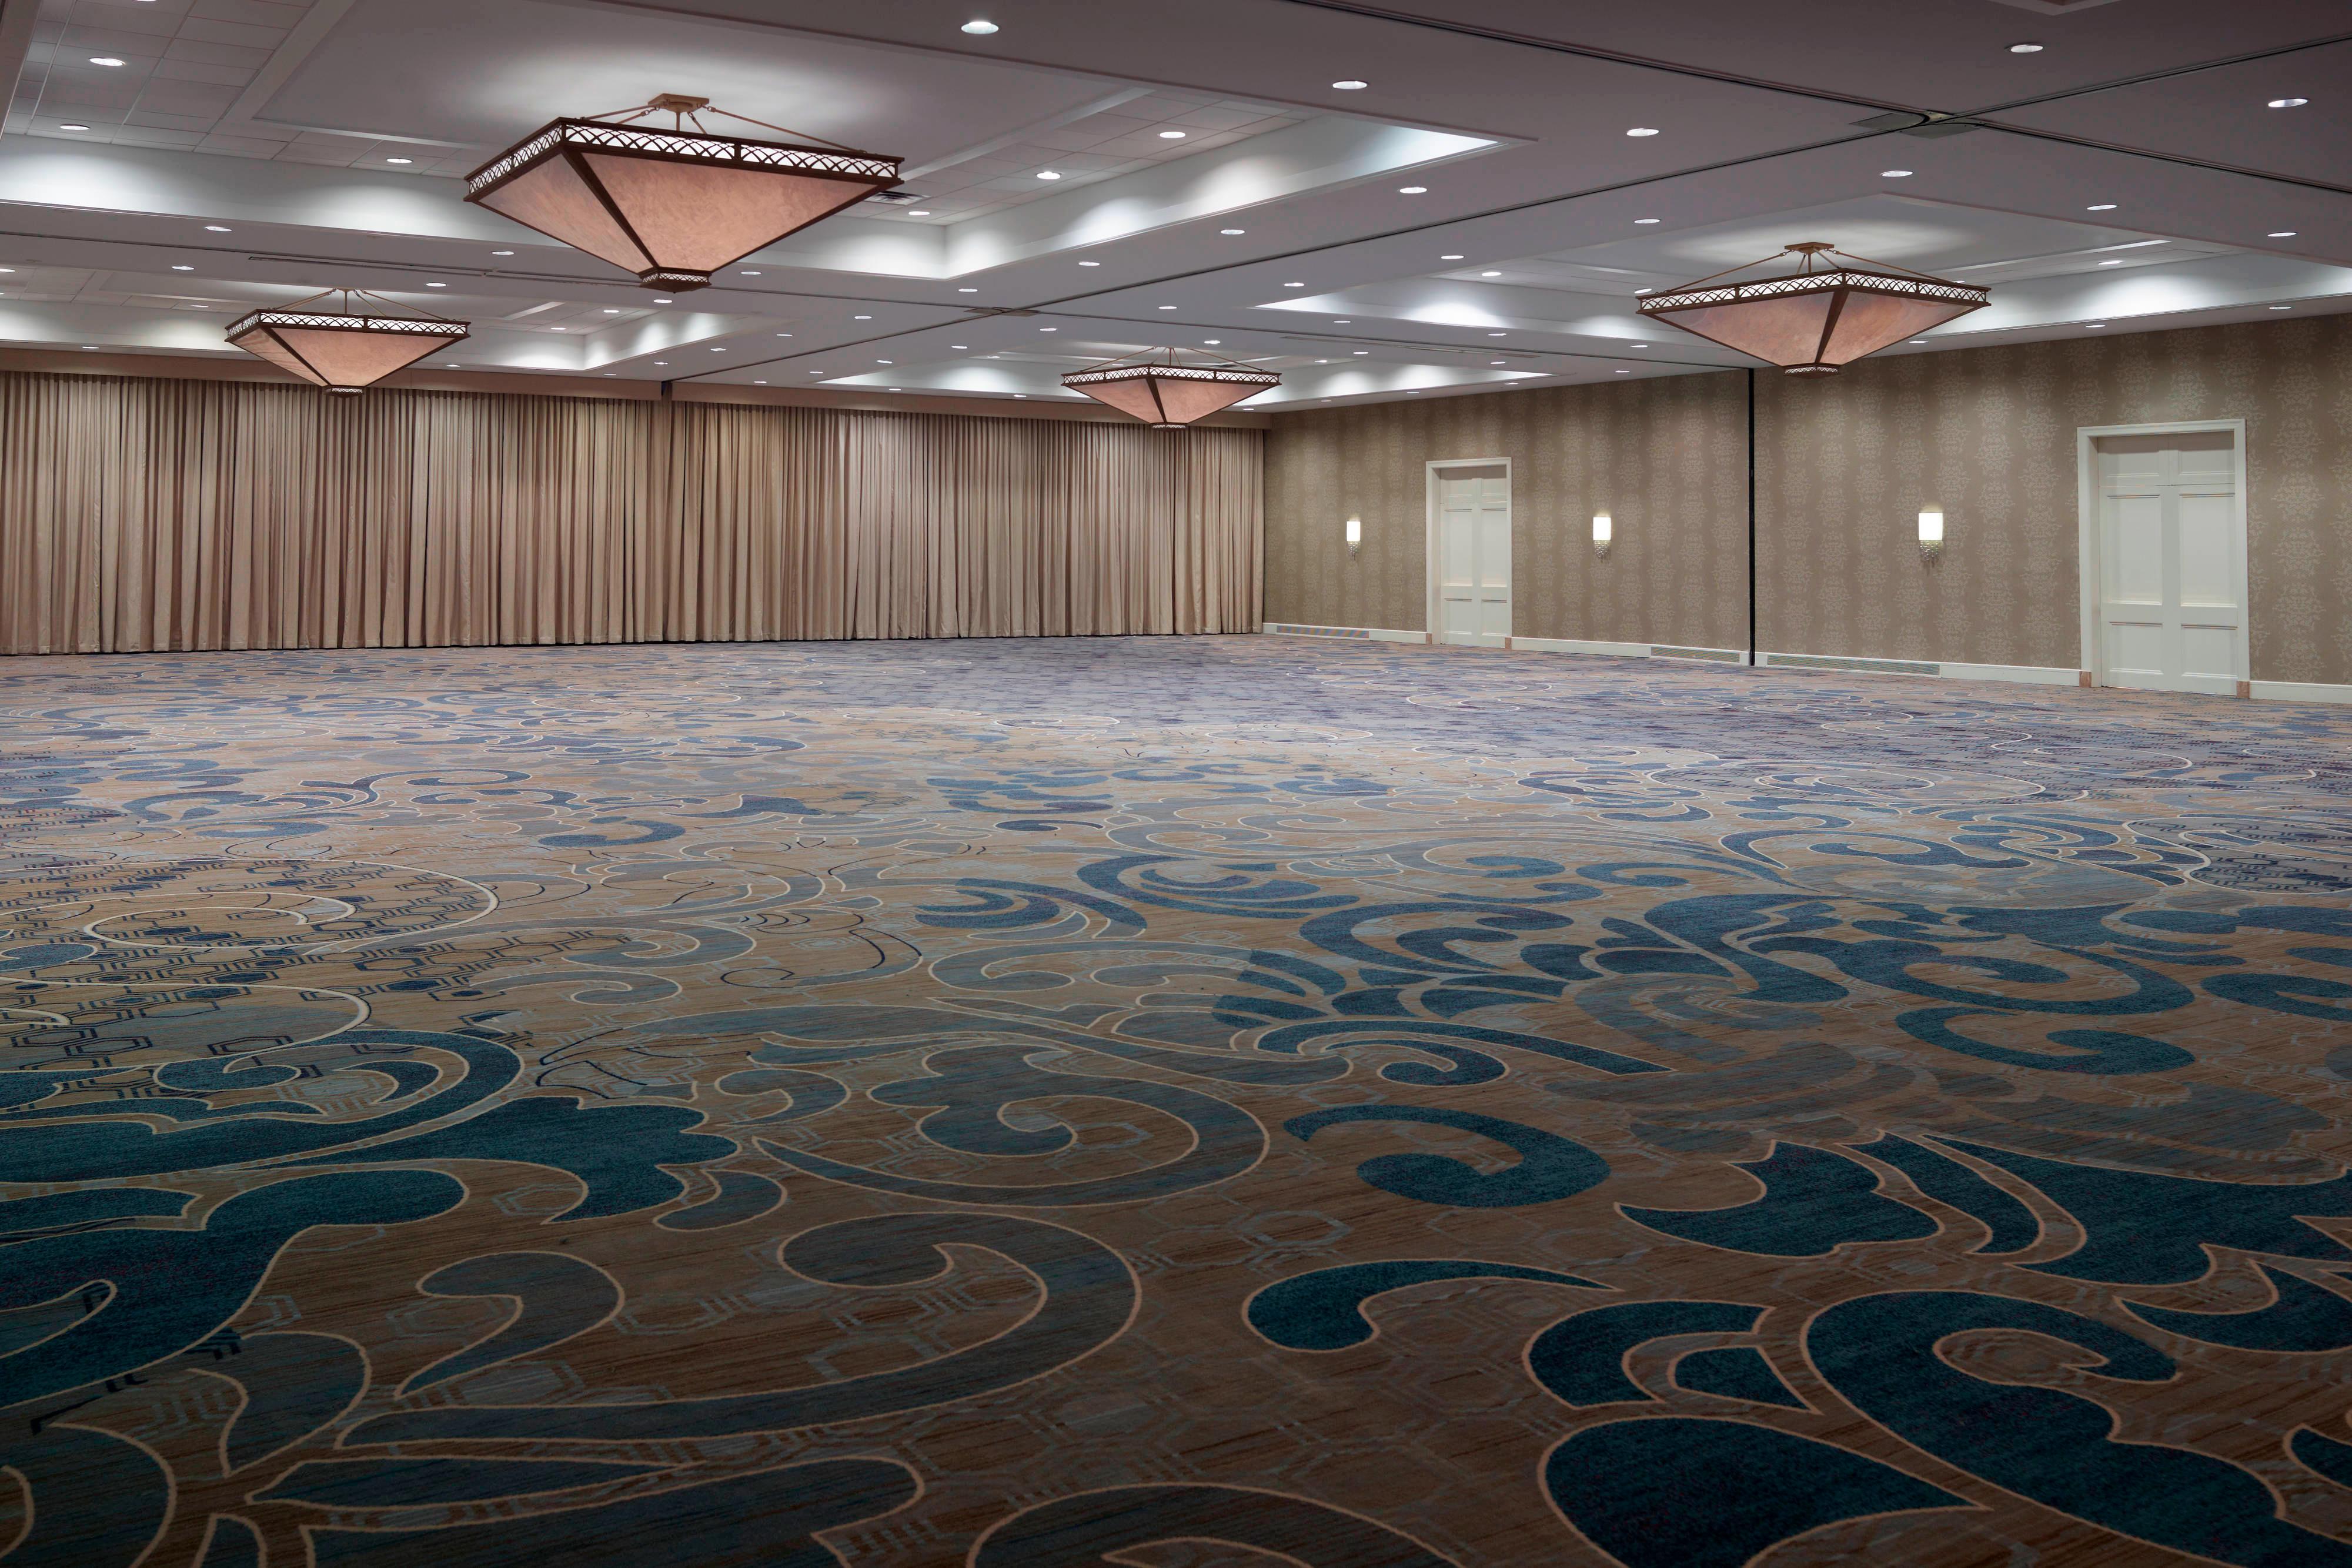 Large ballroom space